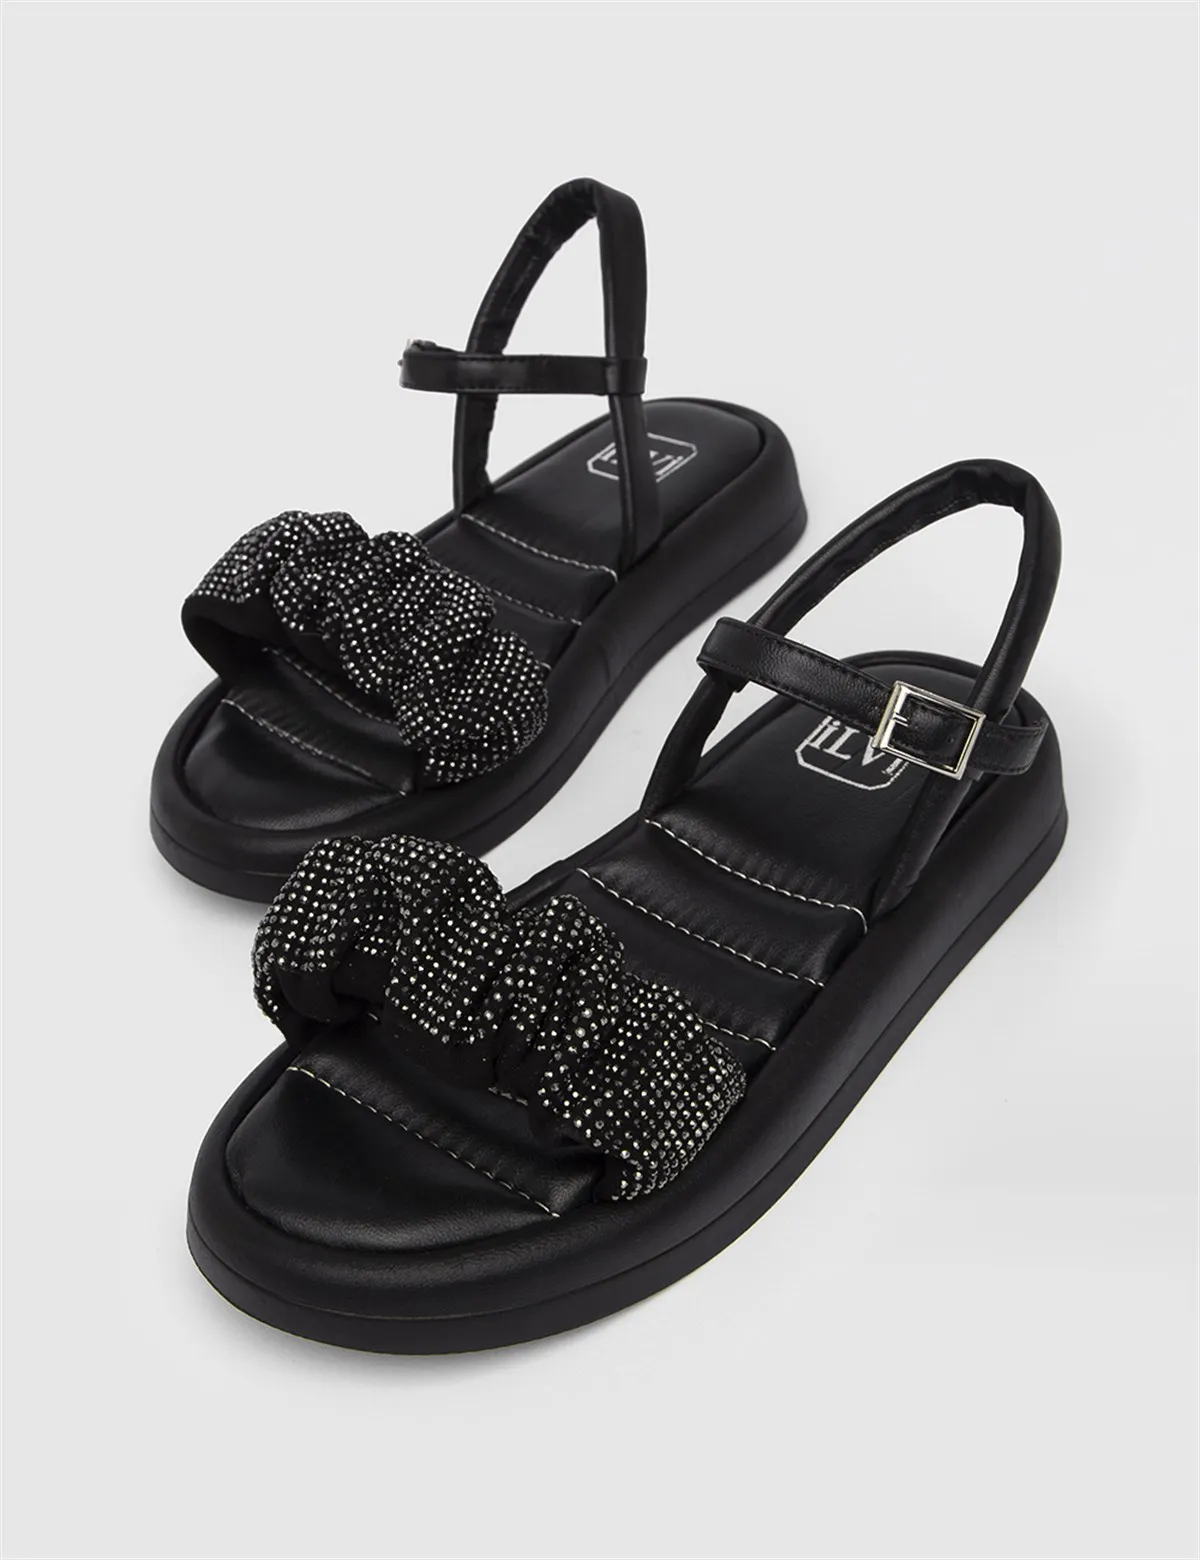 

ILVi-Genuine Leather Handmade Haral Black Leather women's Sandal Shoes 2022 Spring/Summer